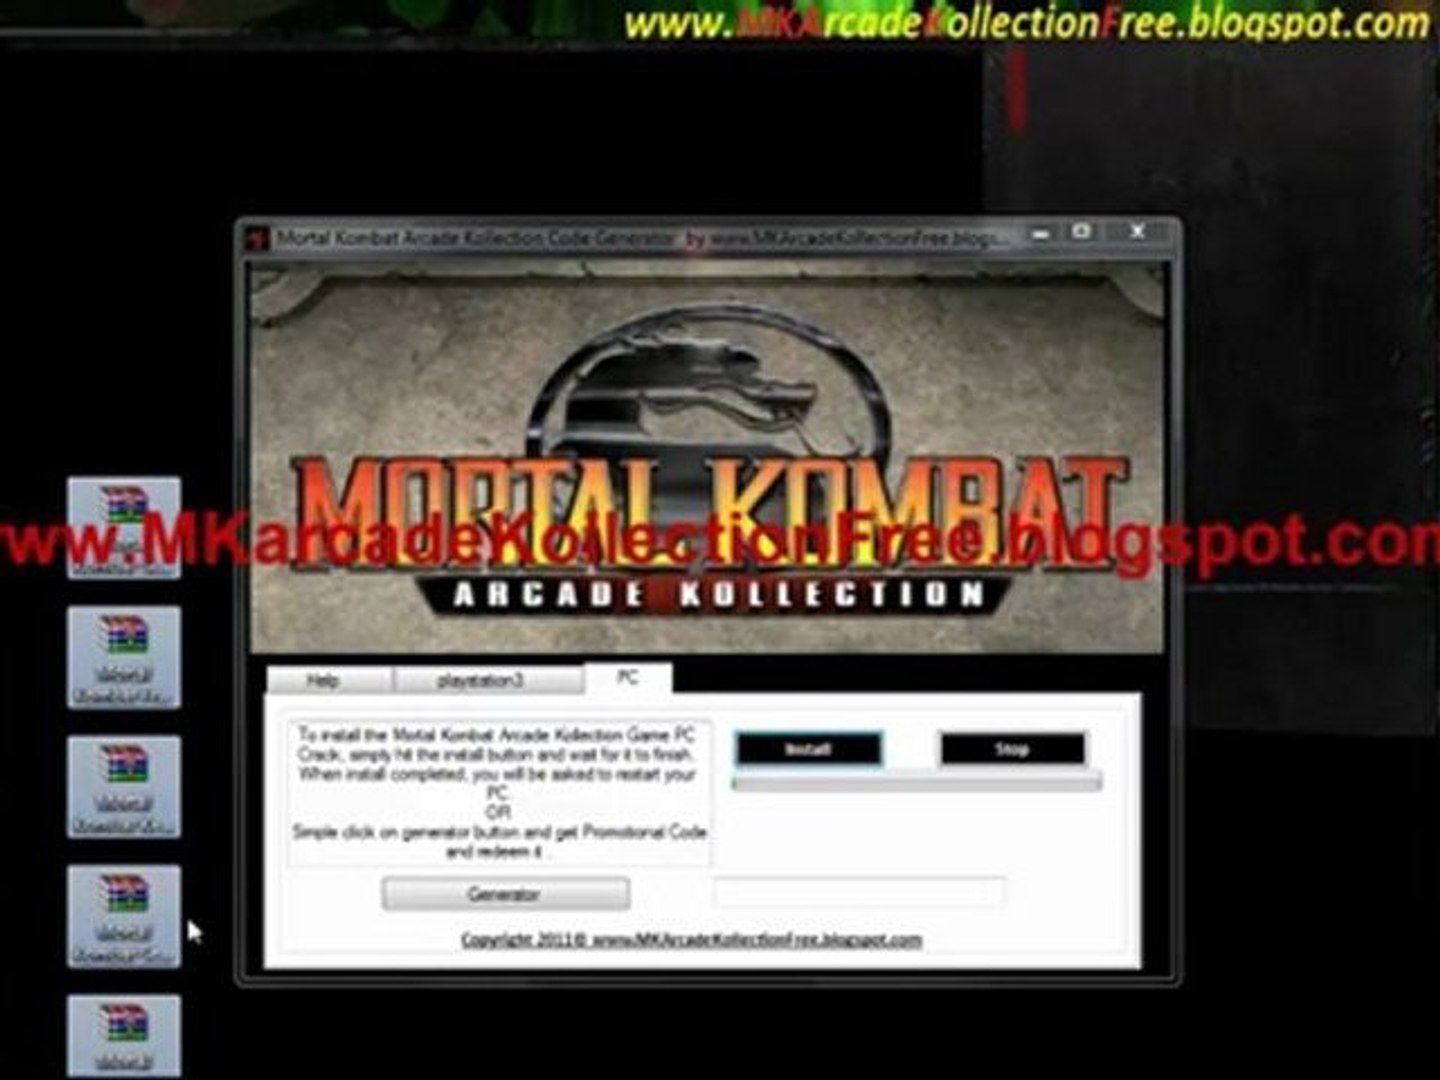 Mortal kombat kollection + All DLC's Code free Download